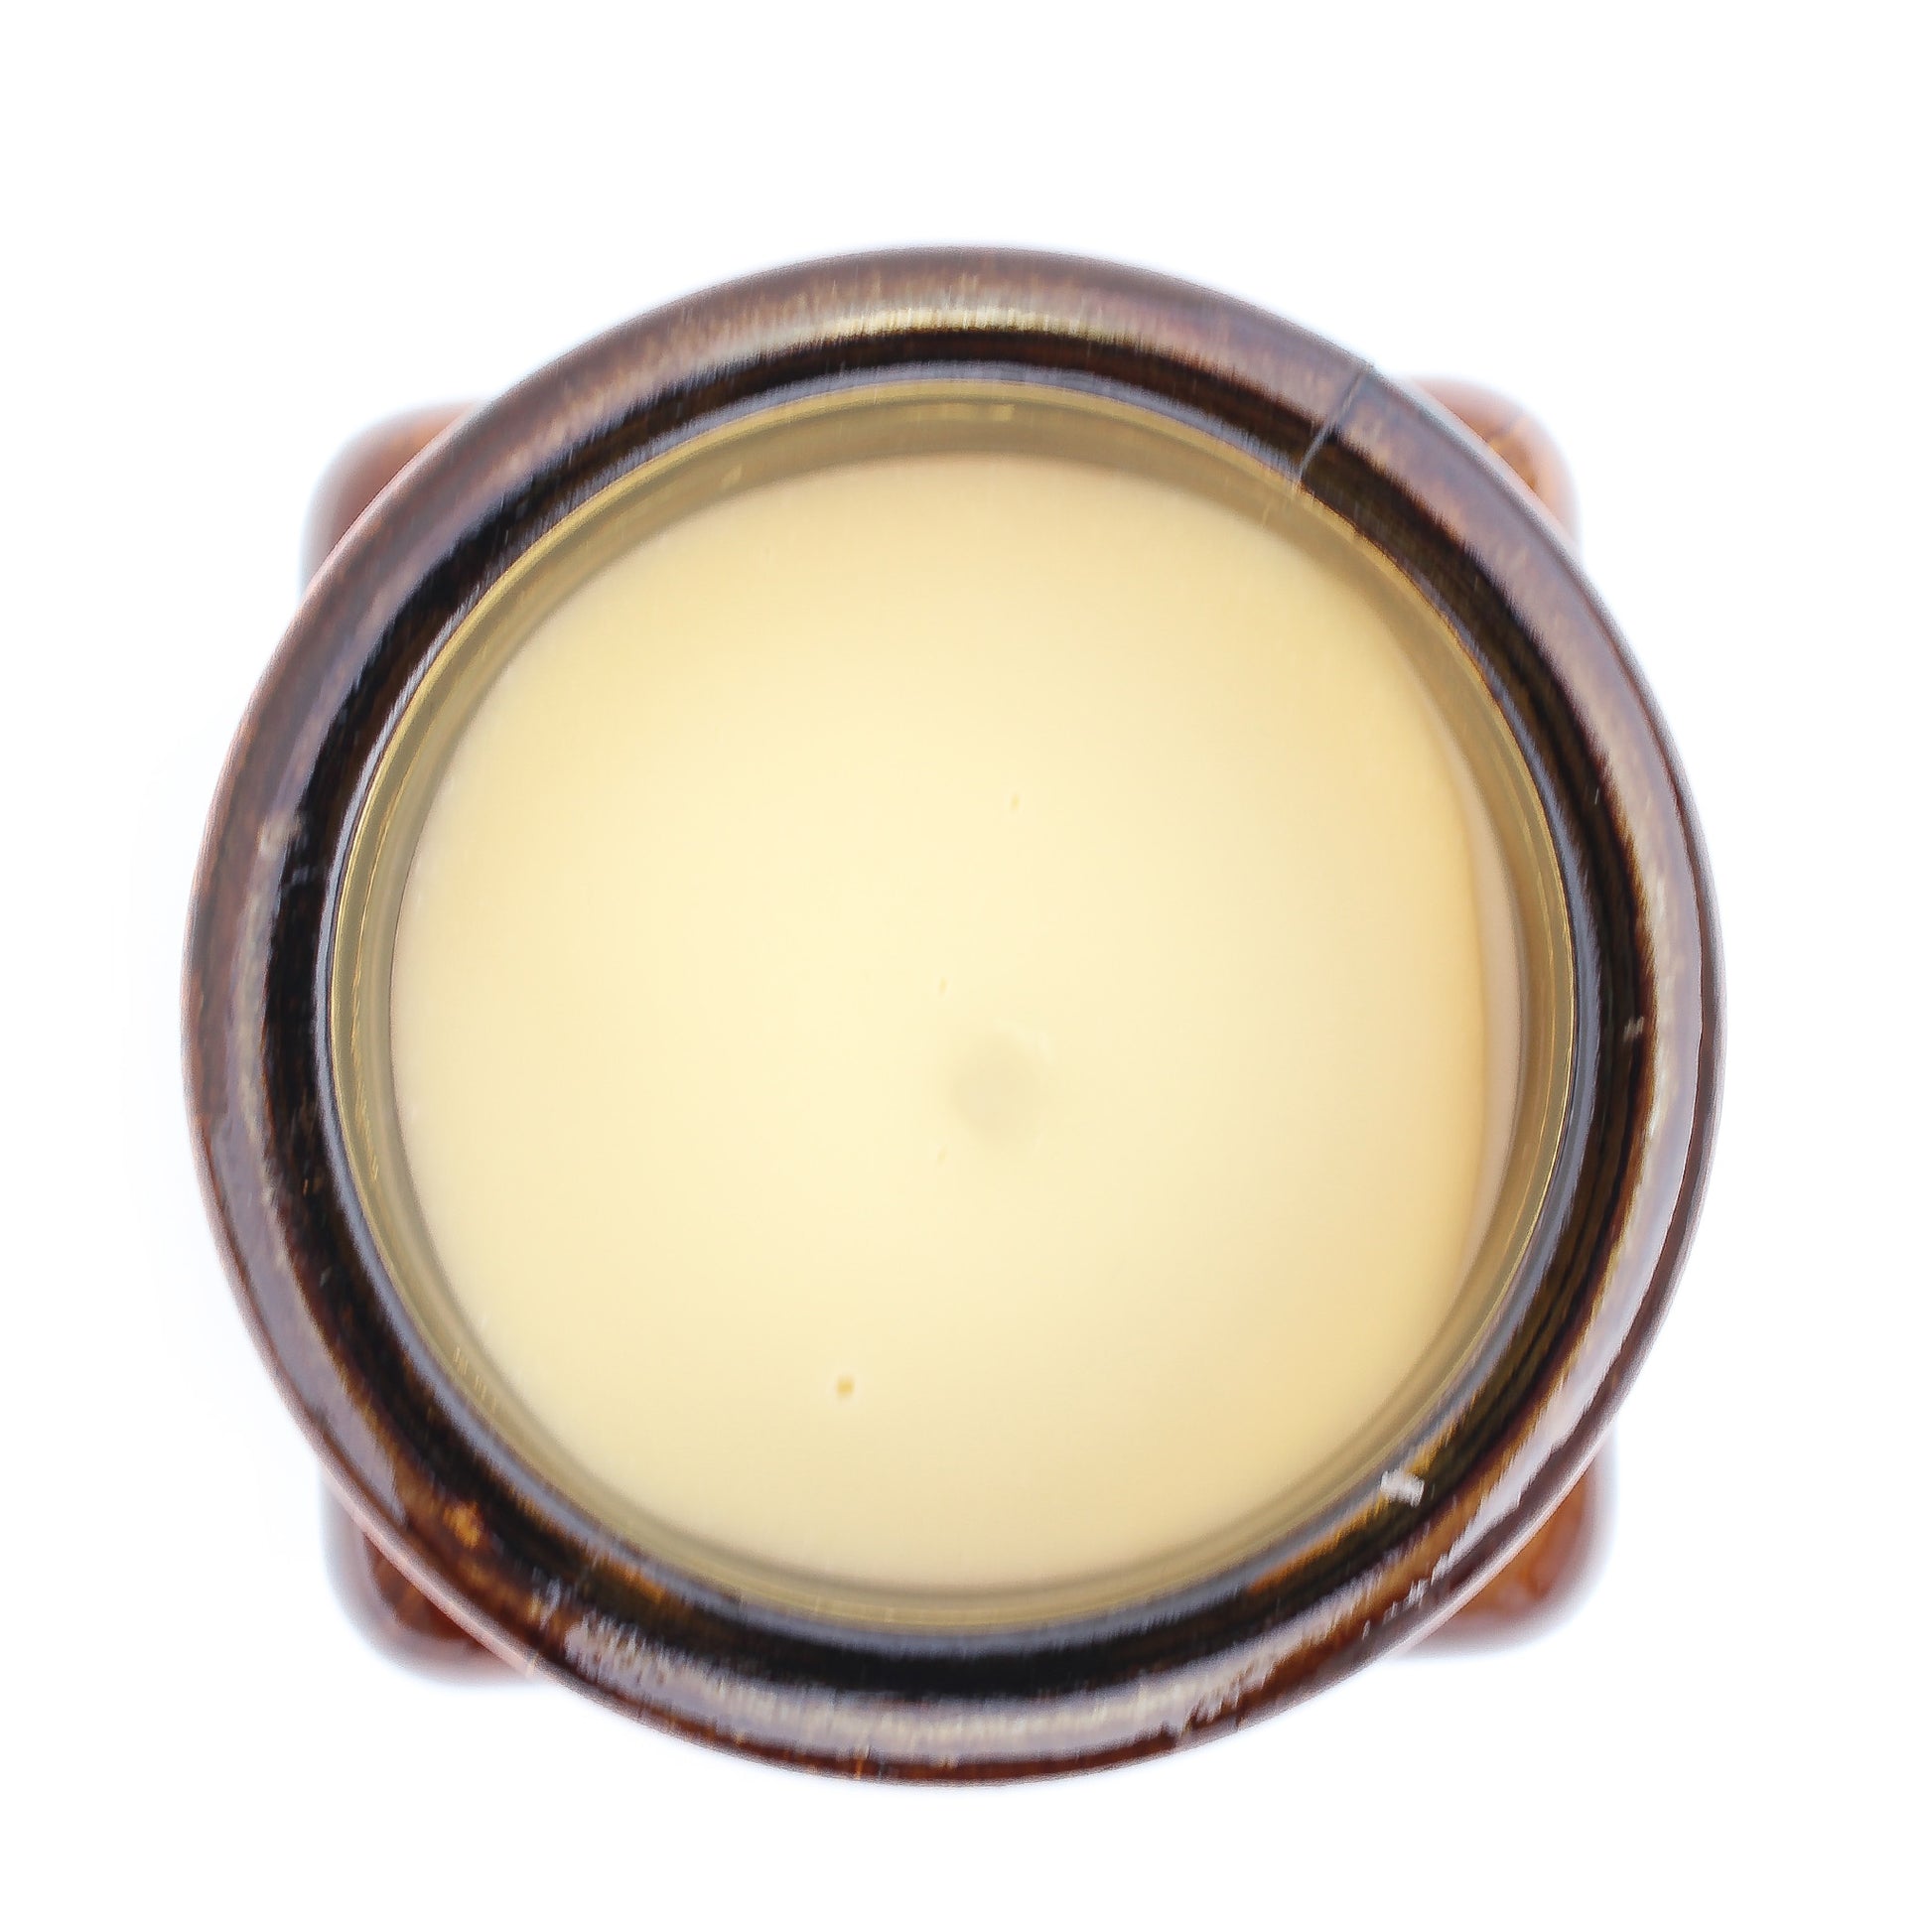 Bijou vanilla & orange shea body butter top view into jar